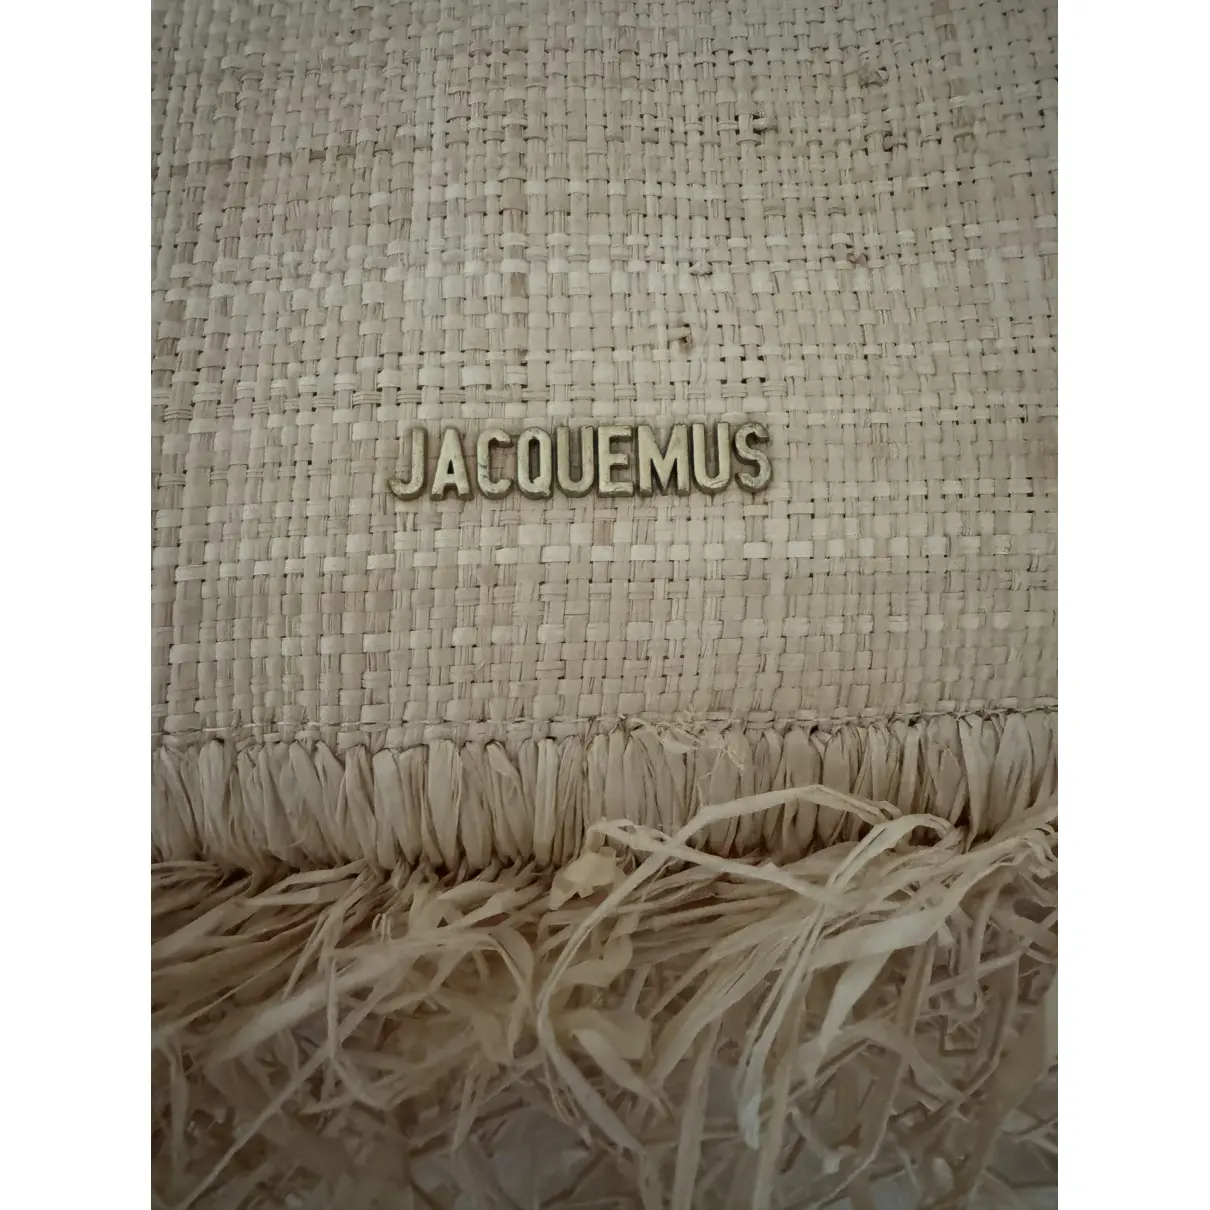 Buy Jacquemus Le Baci tote online